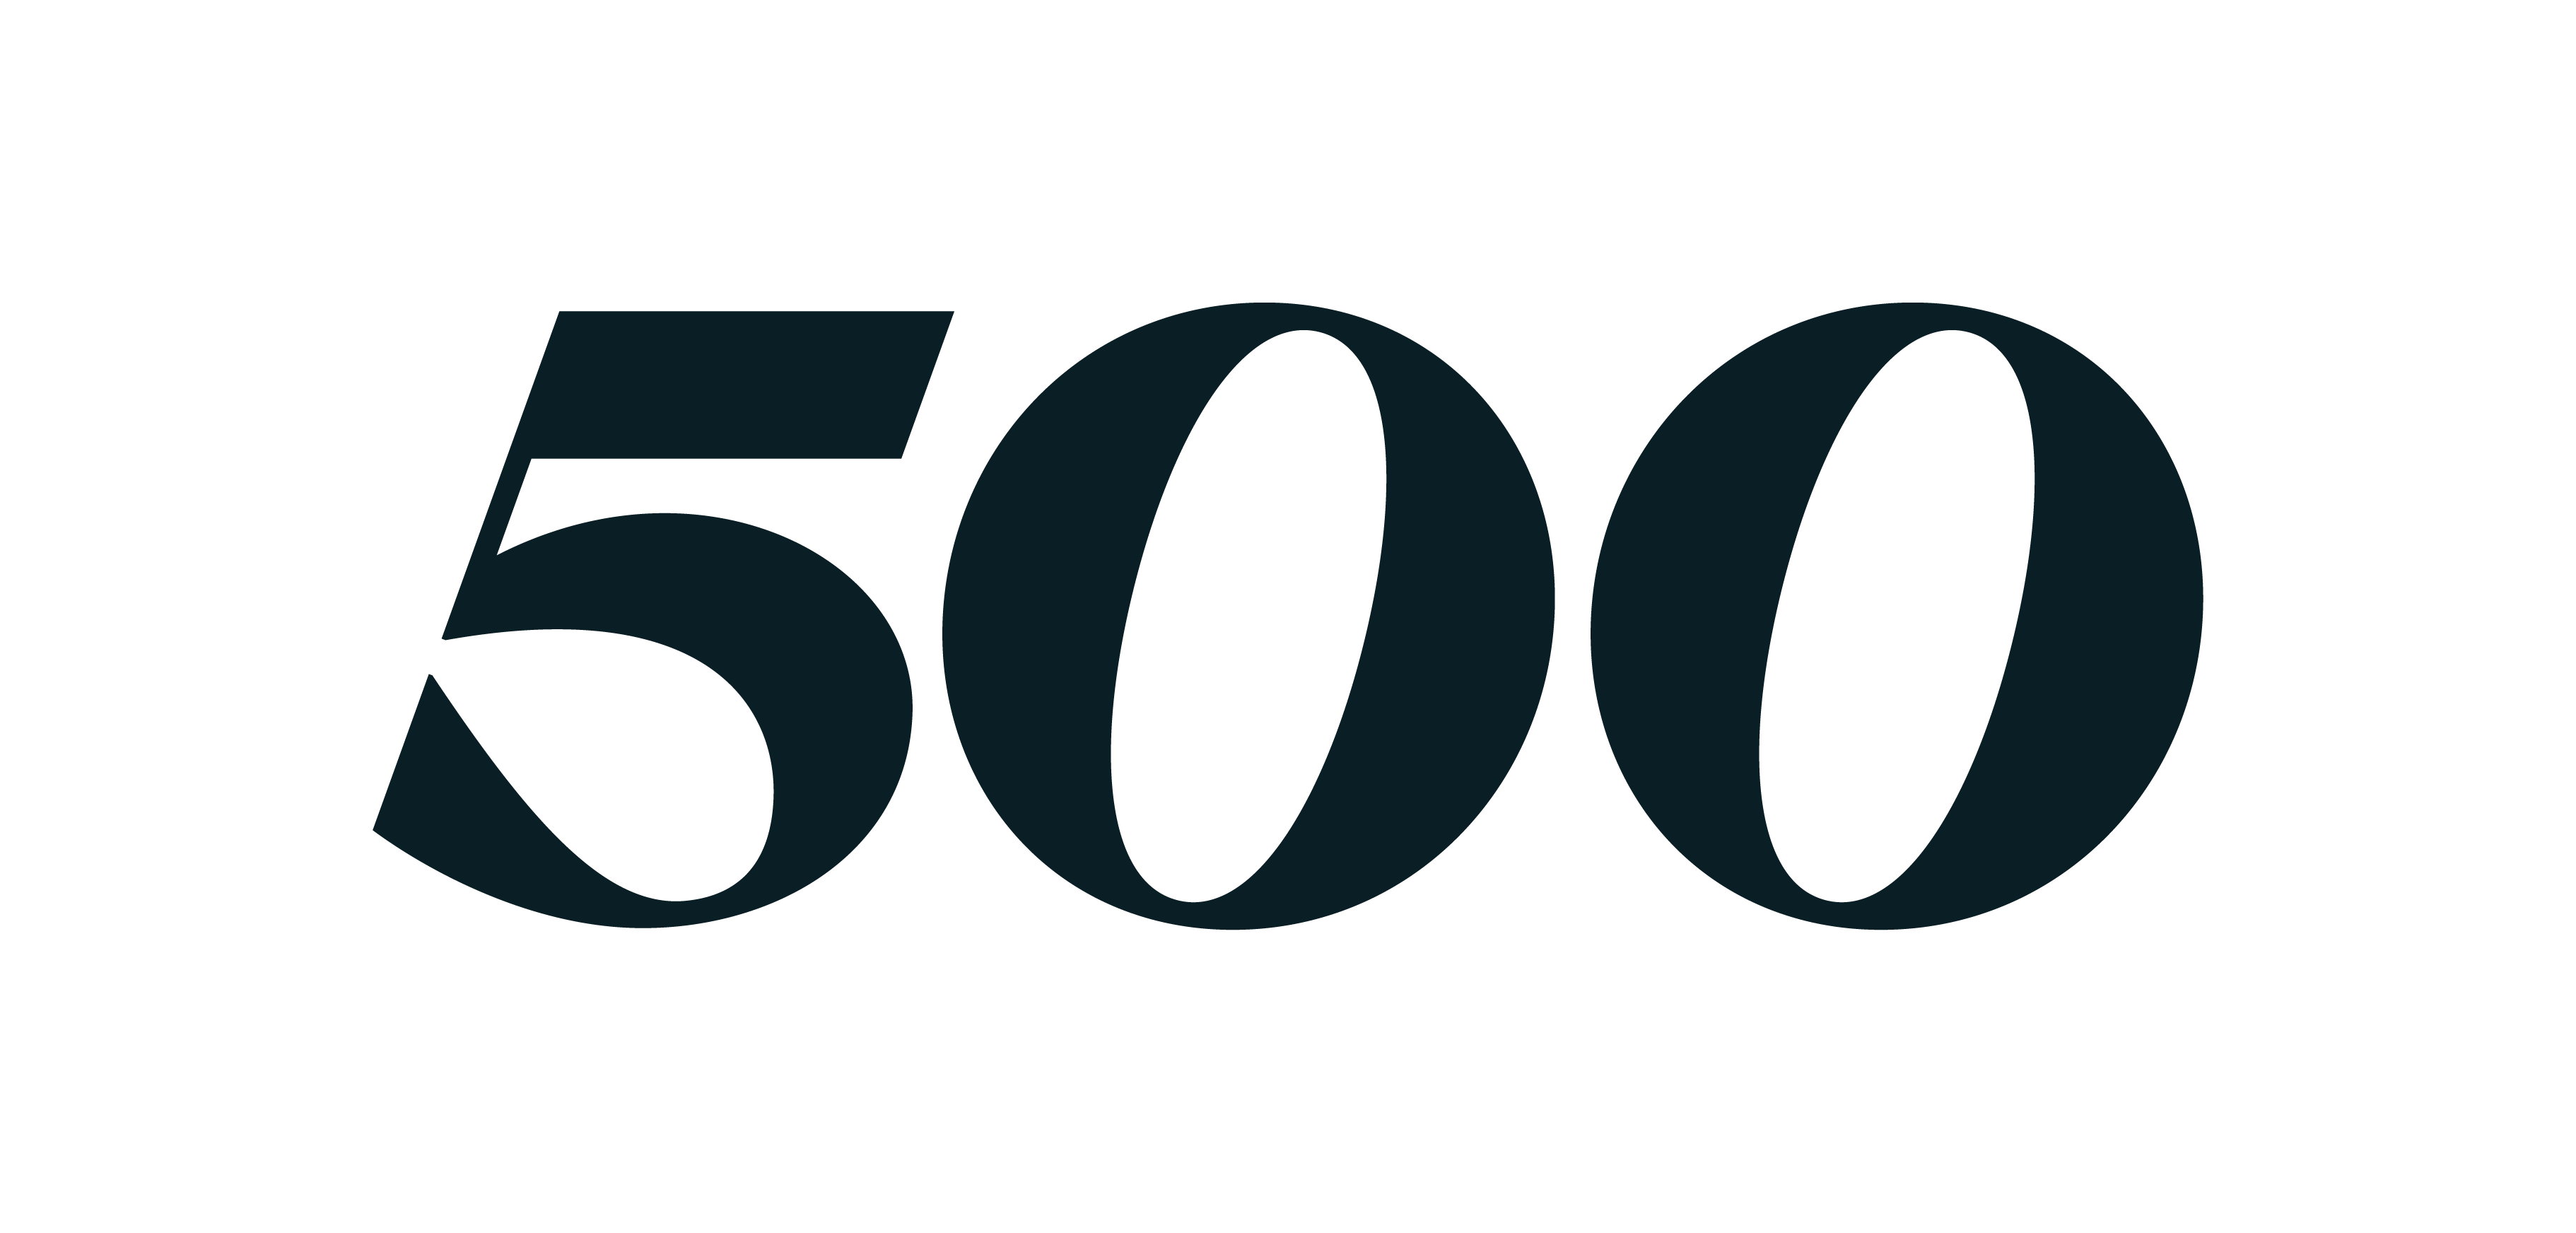 500 STARTUPS INCUBATOR, LLC